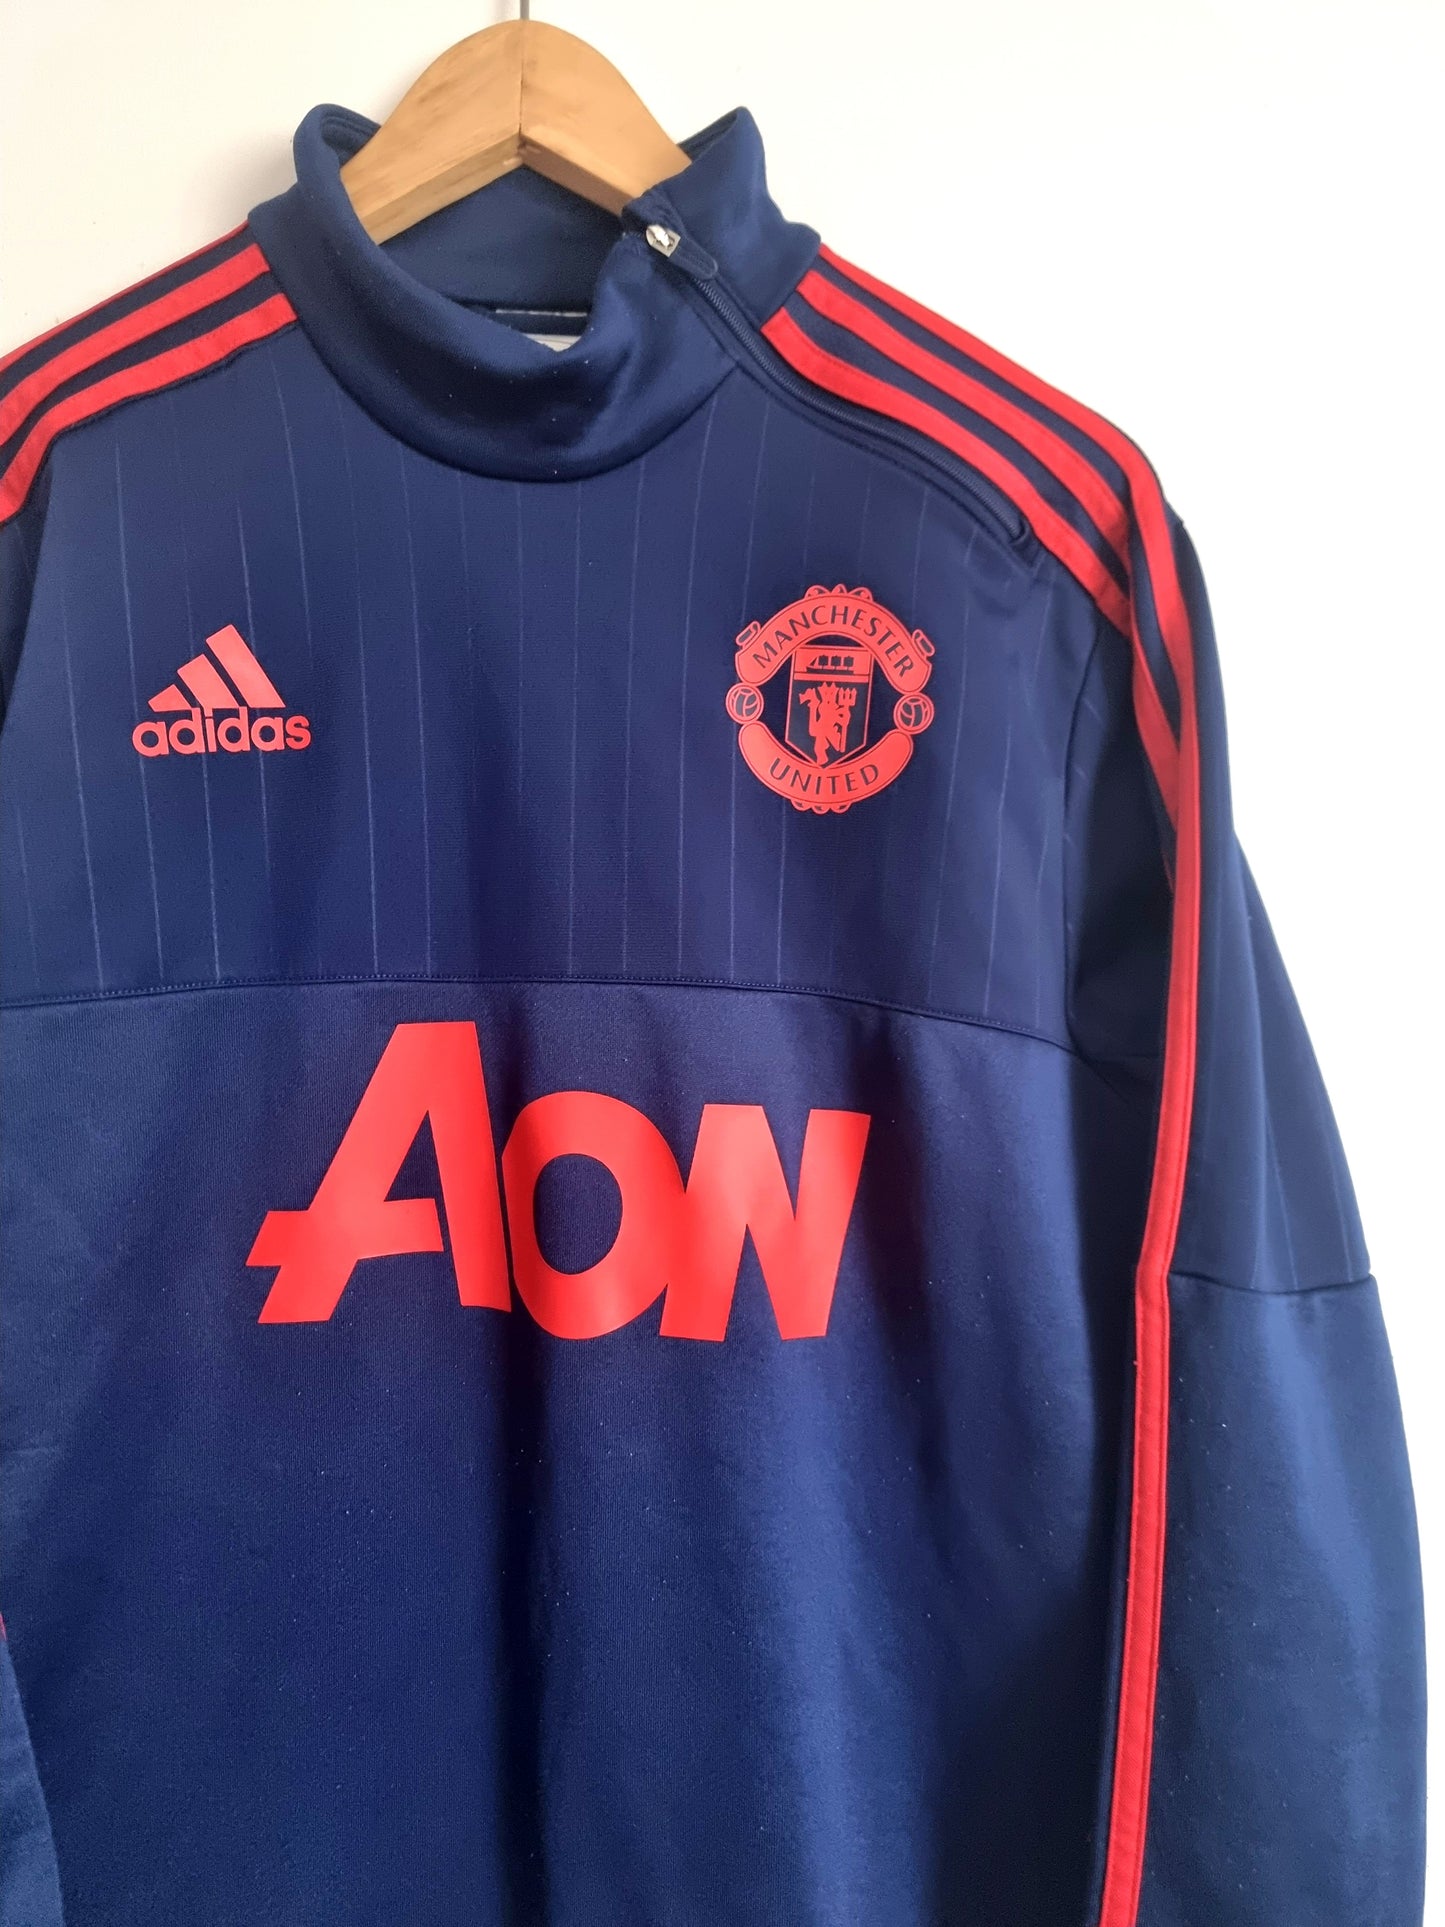 Adidas Manchester United 16/17 Training Sweatshirt Medium